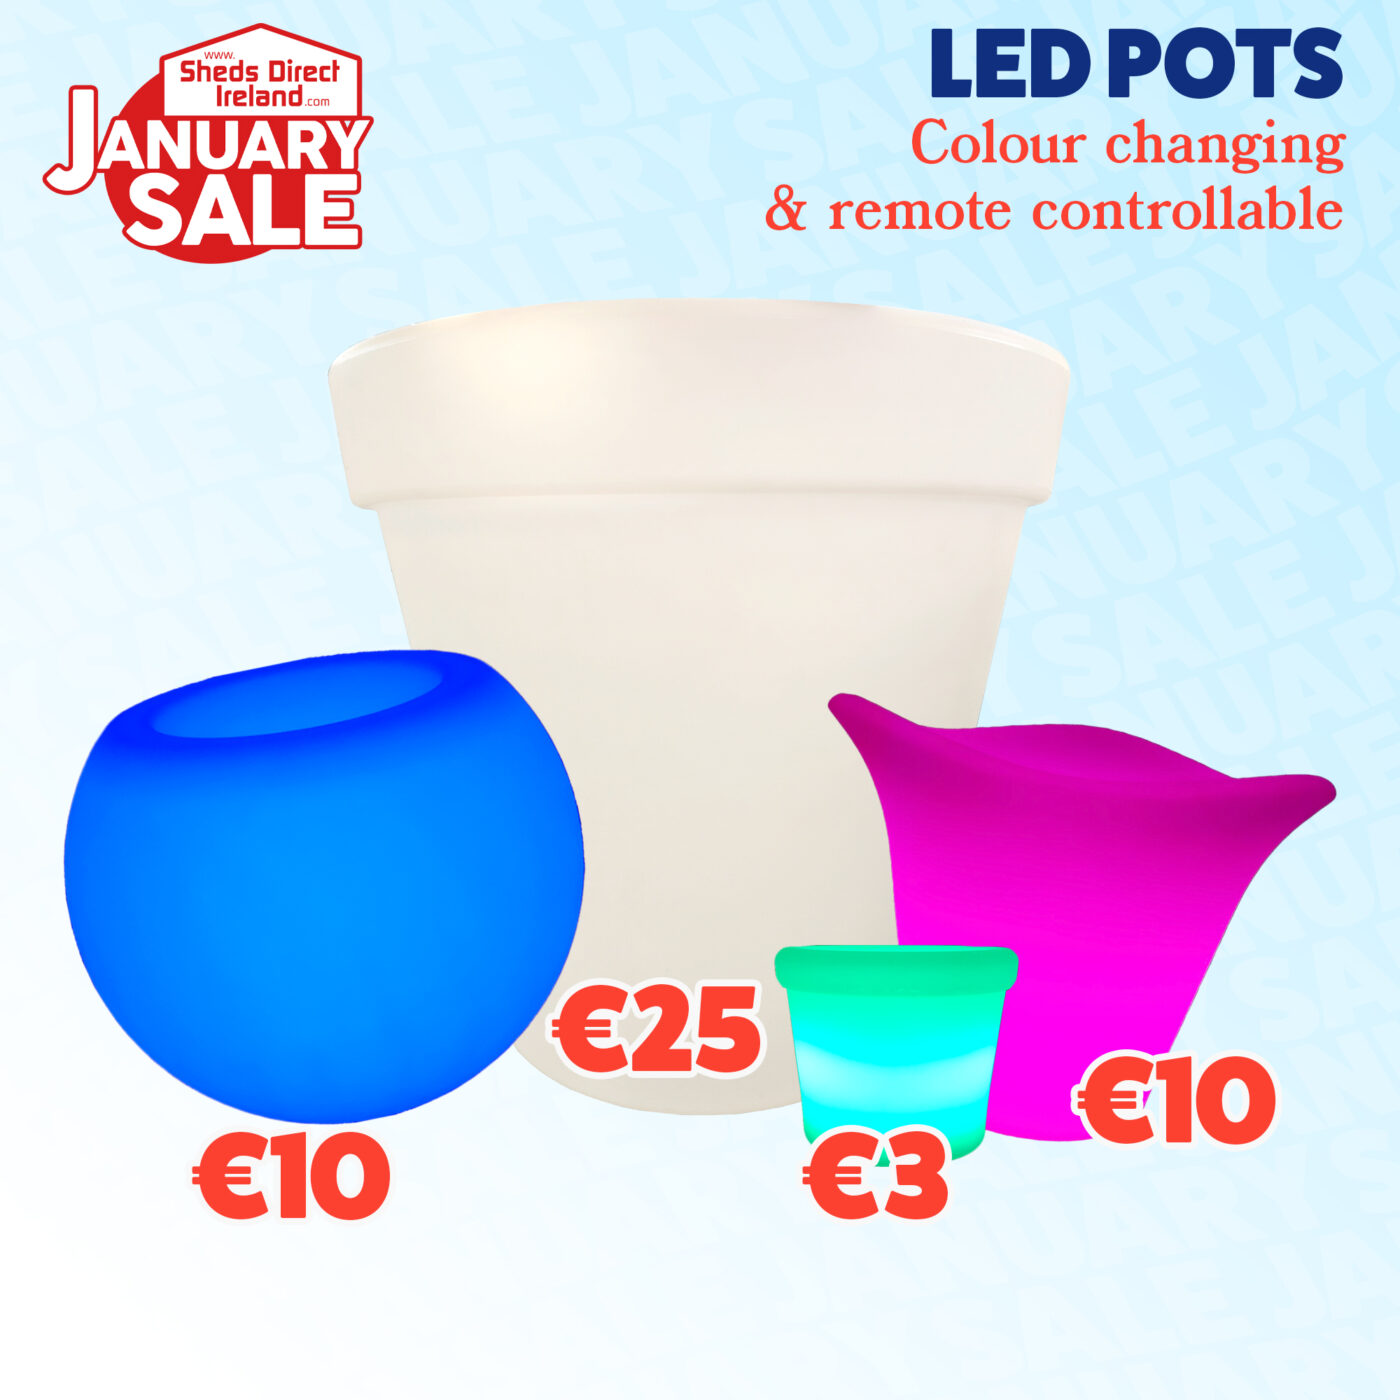 January Sale - LED Pots